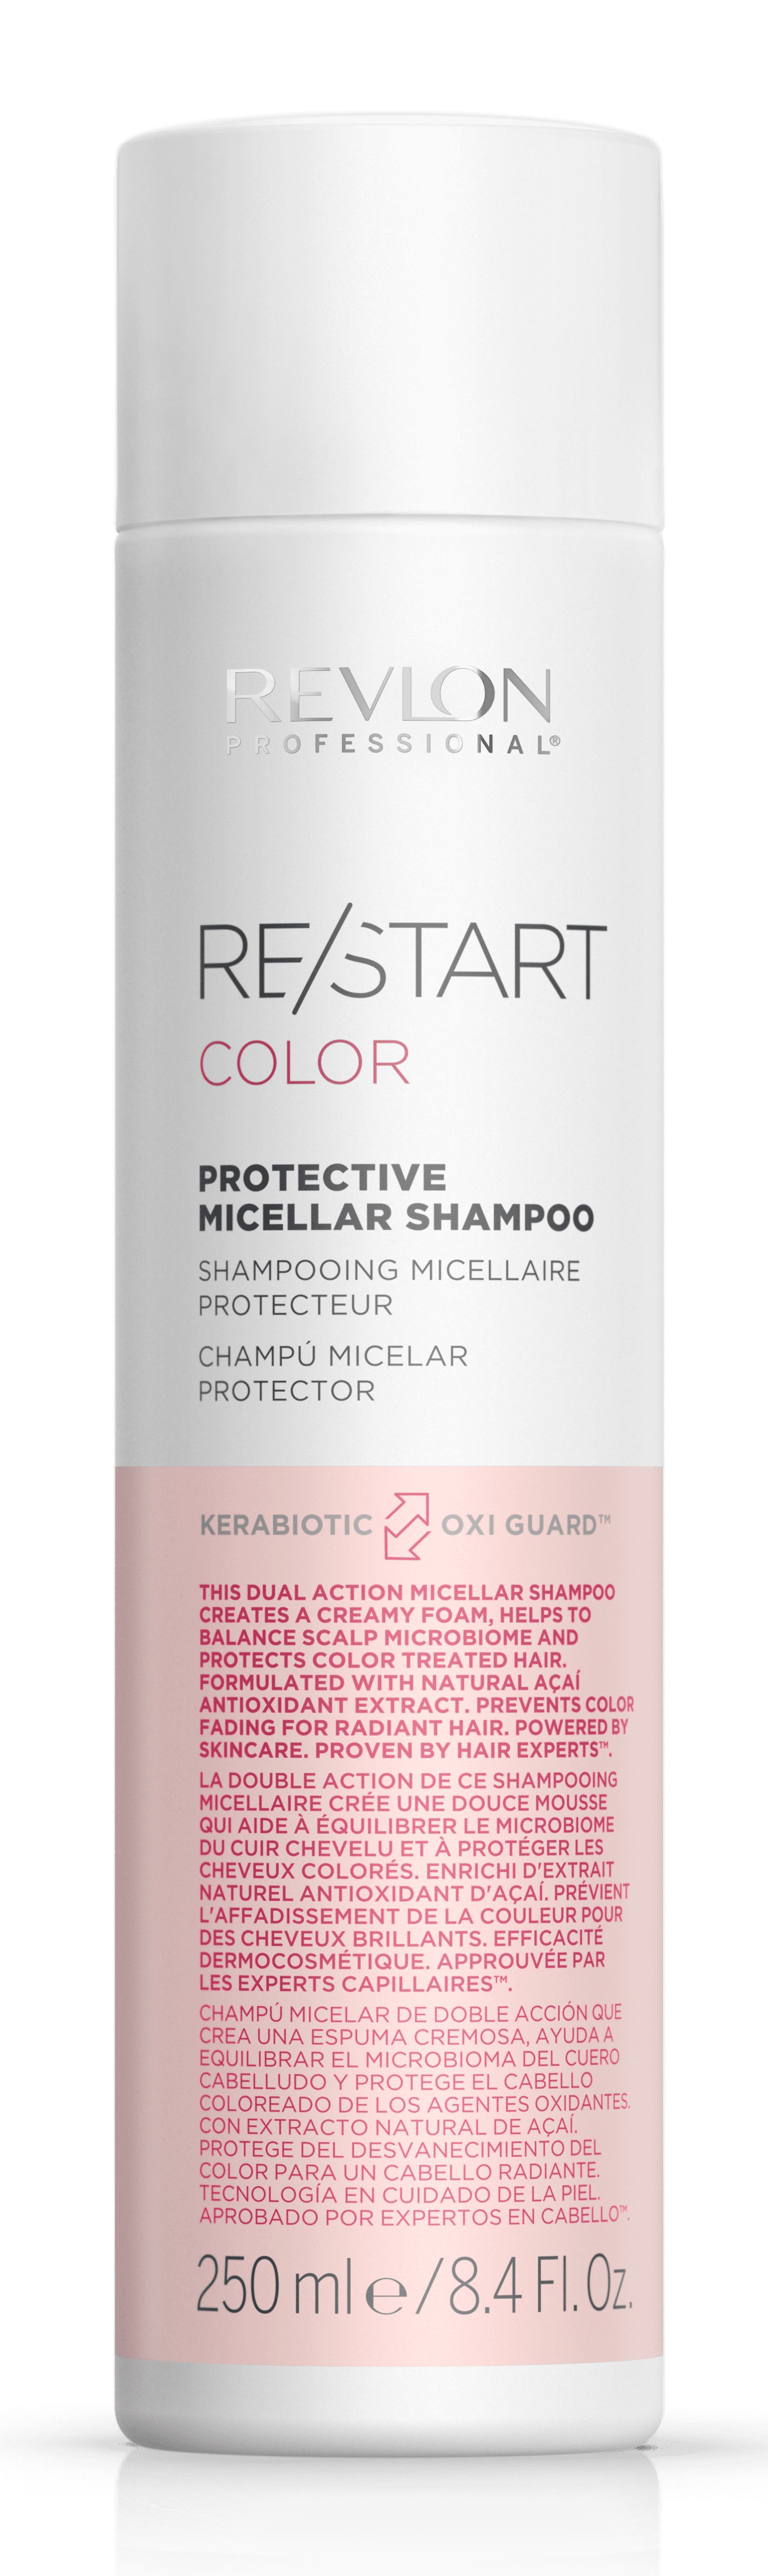 Revlon Restart - Champú Micelar COLOR protector del color 250 ml